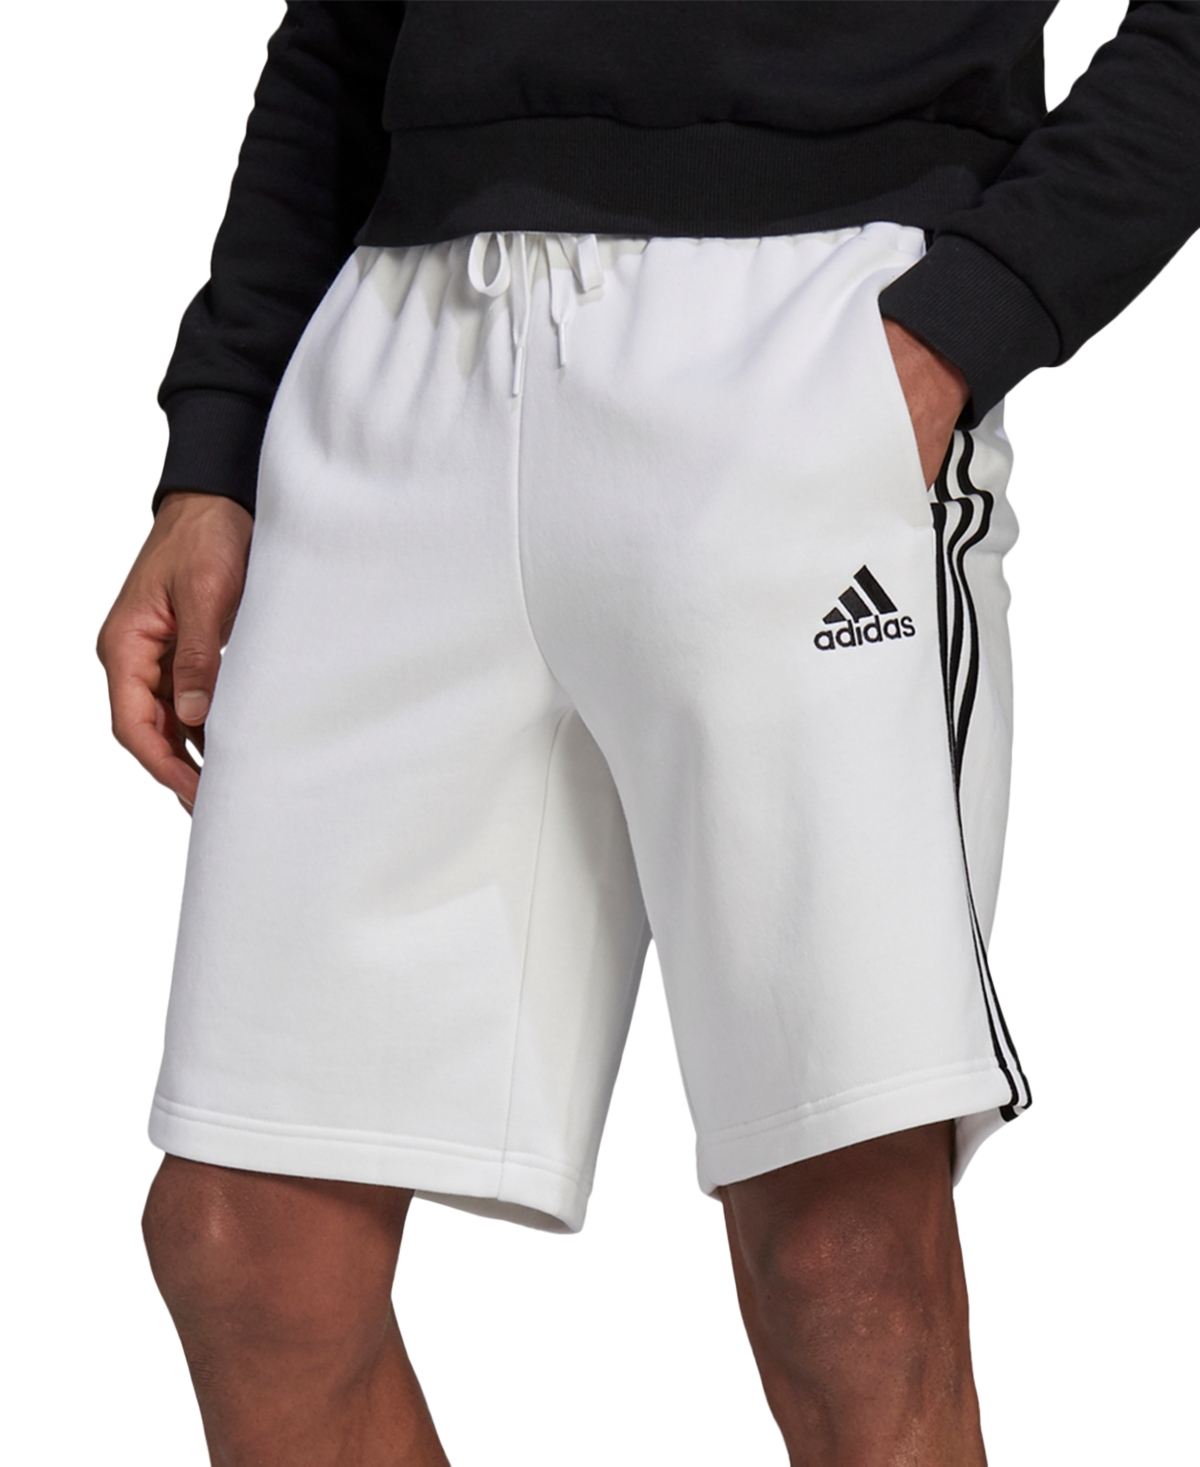 Adidas Originals Men's 3-stripes 10" Fleece Shorts In White,blk